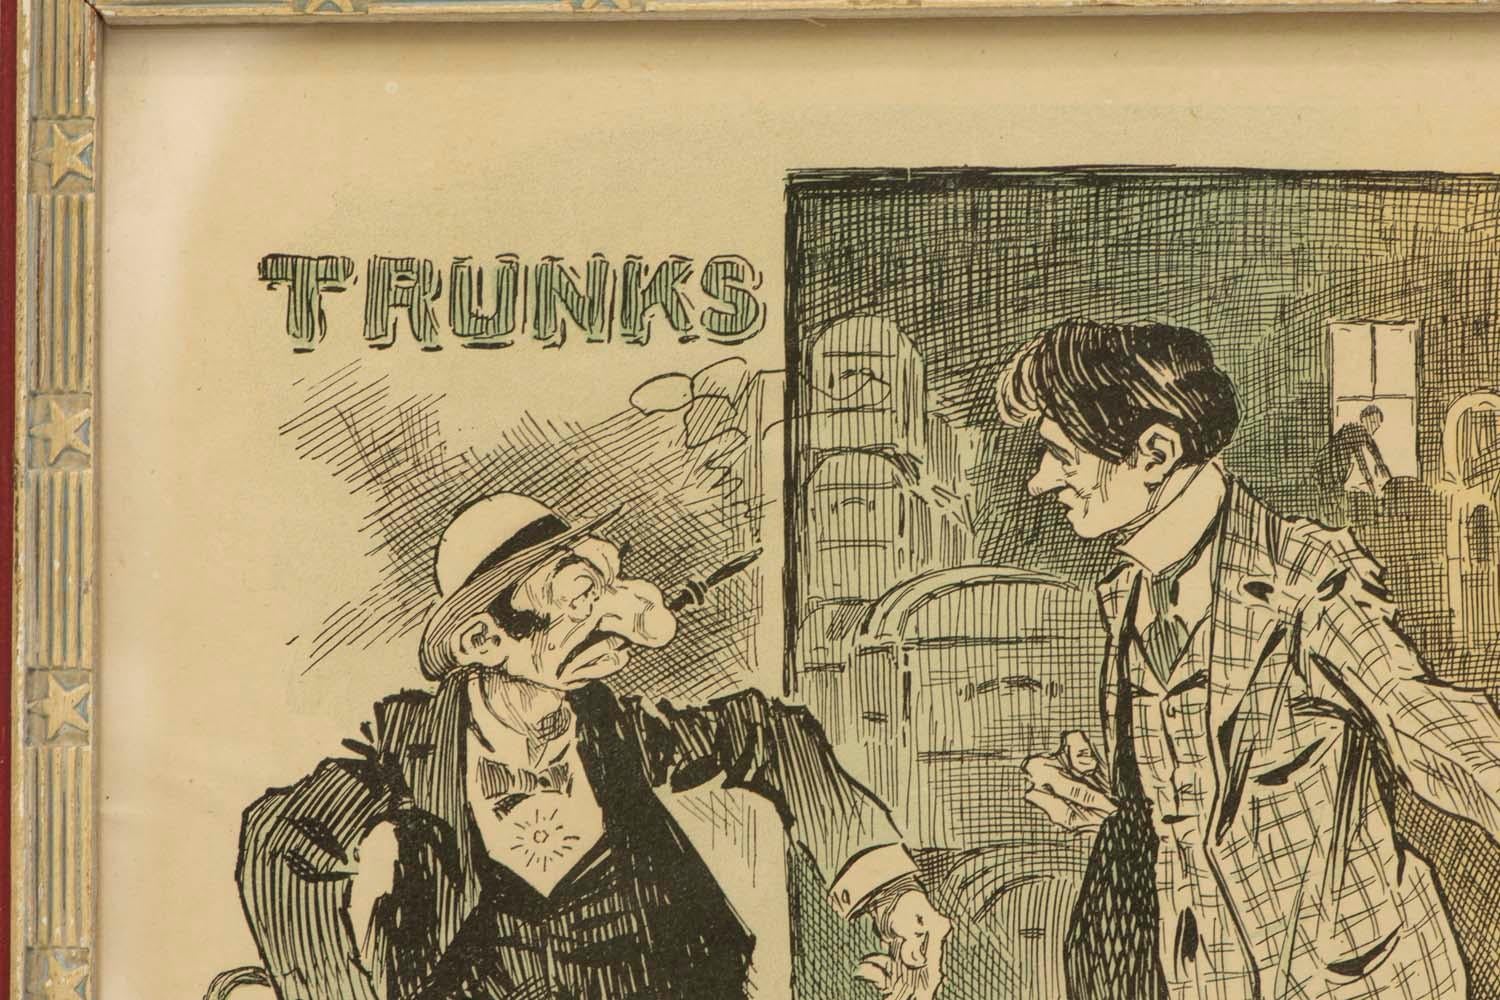 American cartoon, USA, 1895.
Caption reads: 'A Natural Mistake. Ikenstein: 